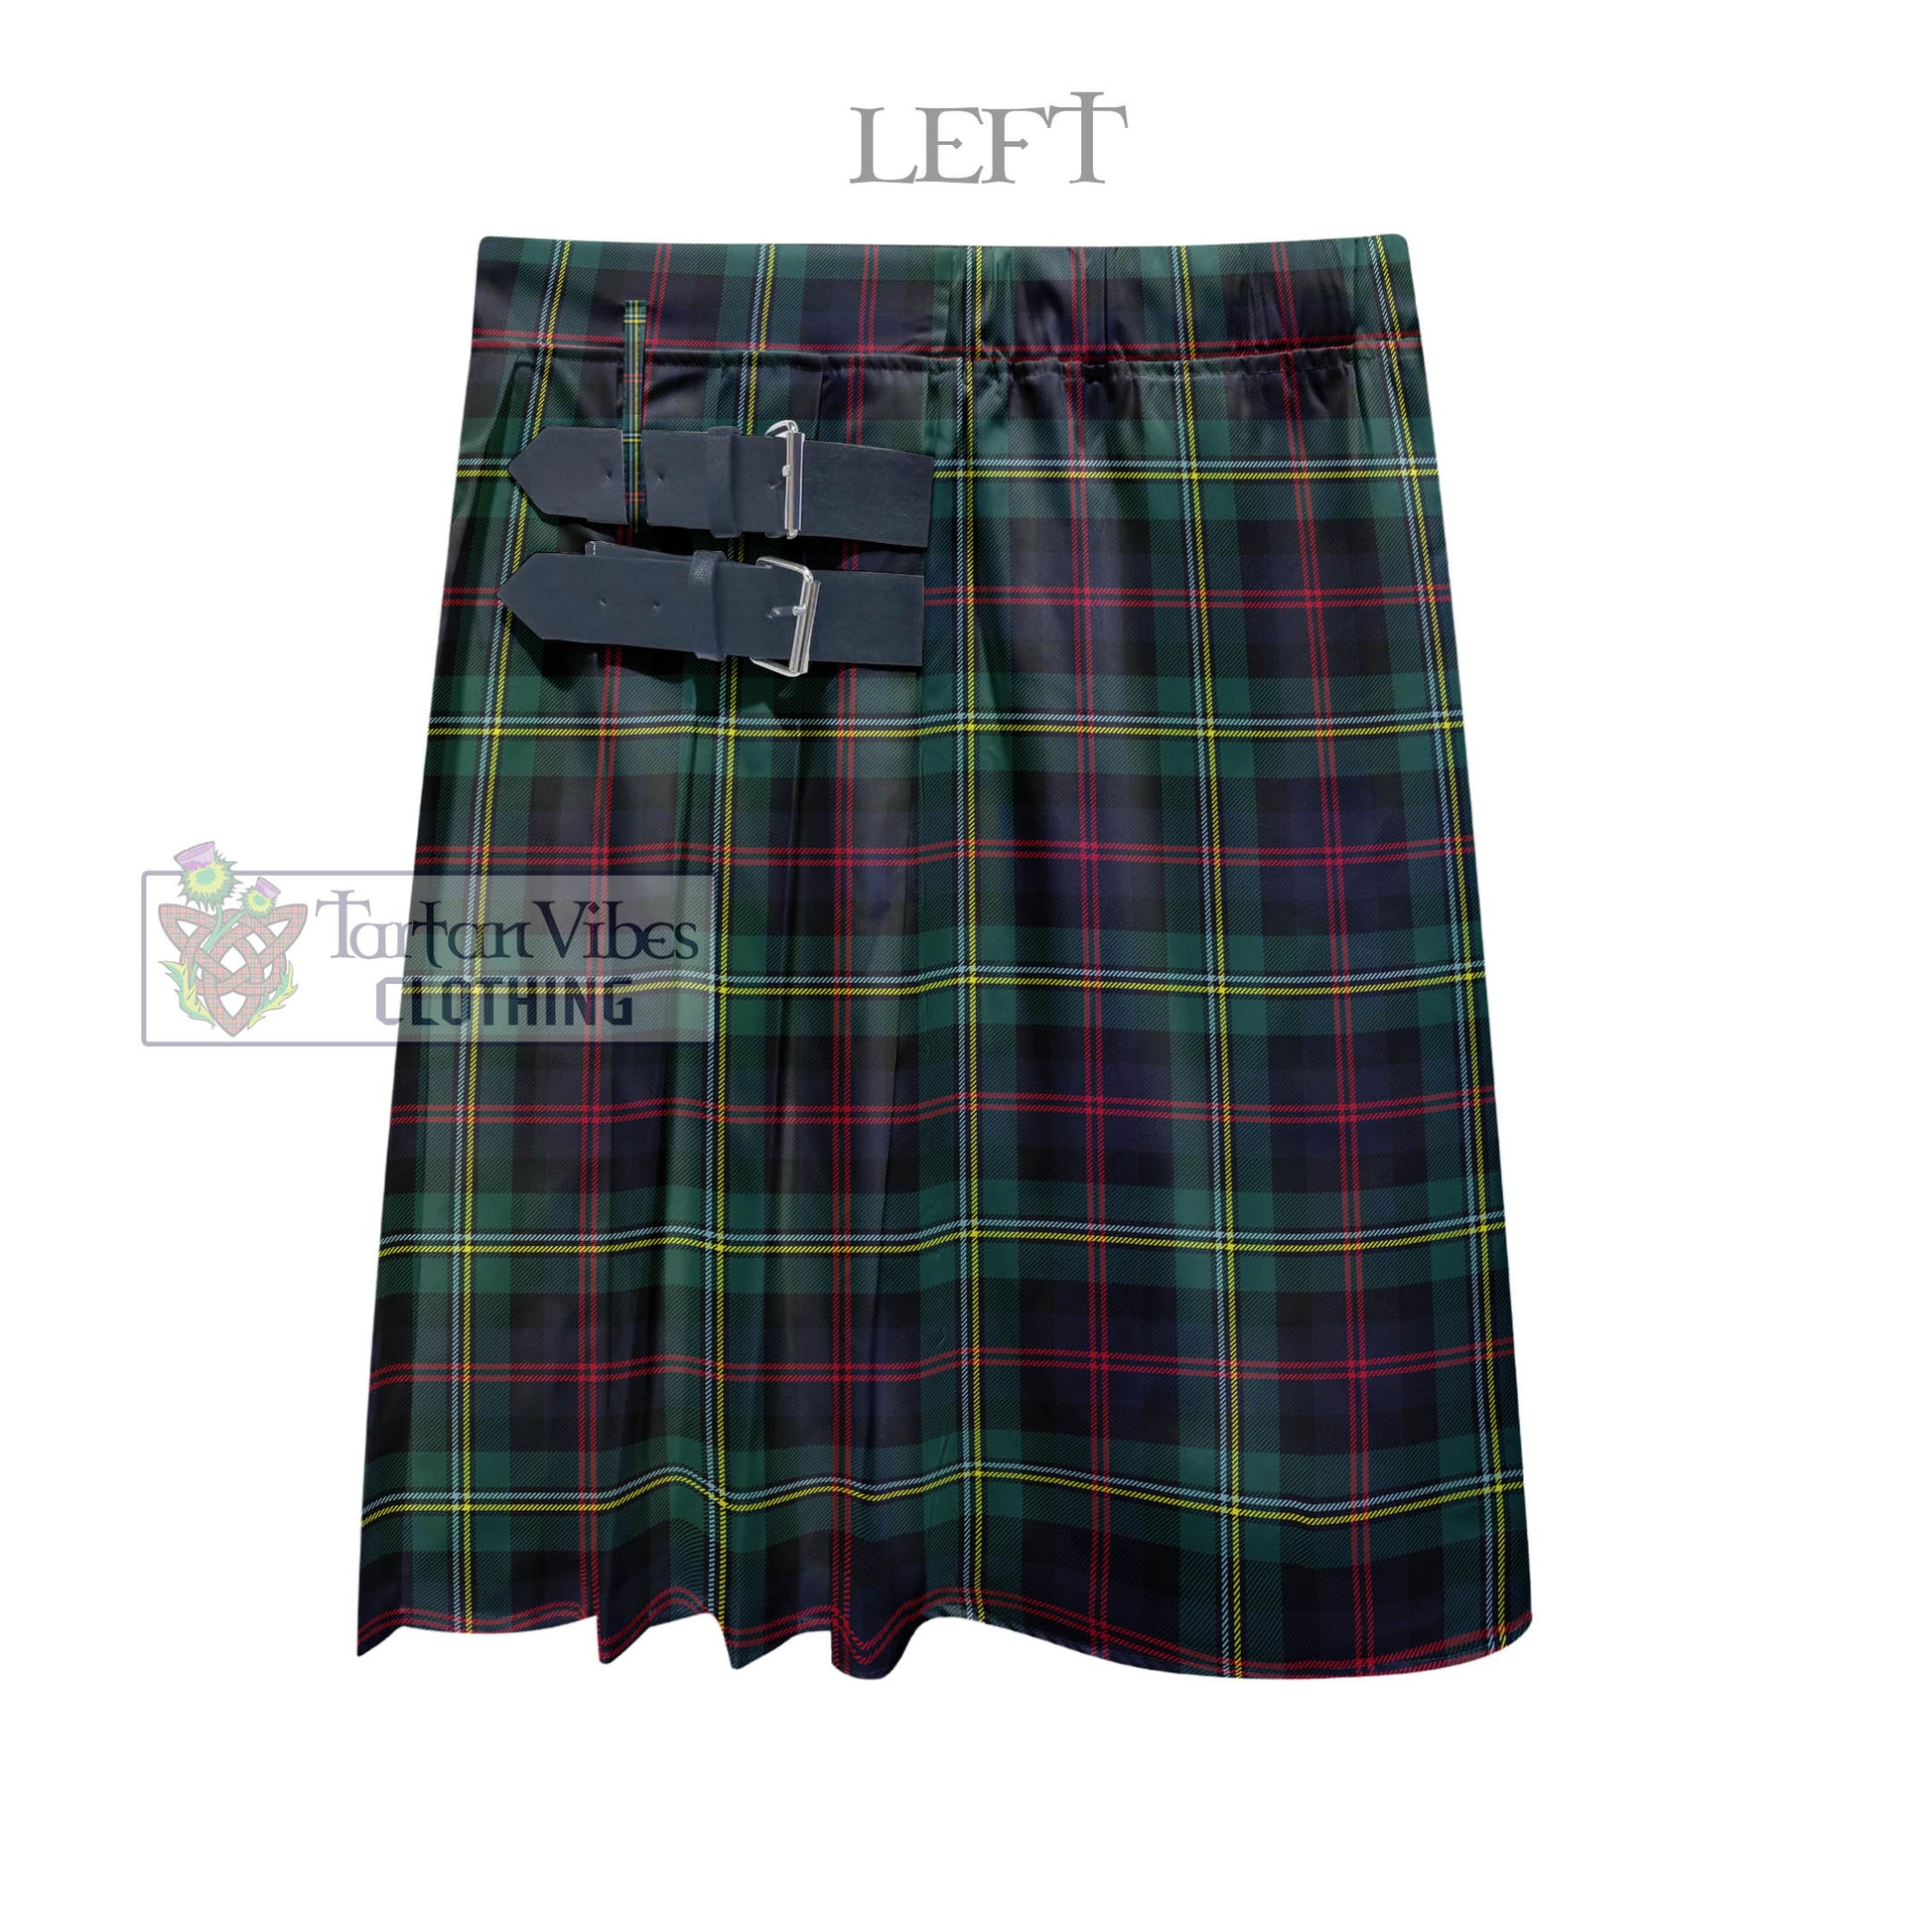 Tartan Vibes Clothing Malcolm Modern Tartan Men's Pleated Skirt - Fashion Casual Retro Scottish Style